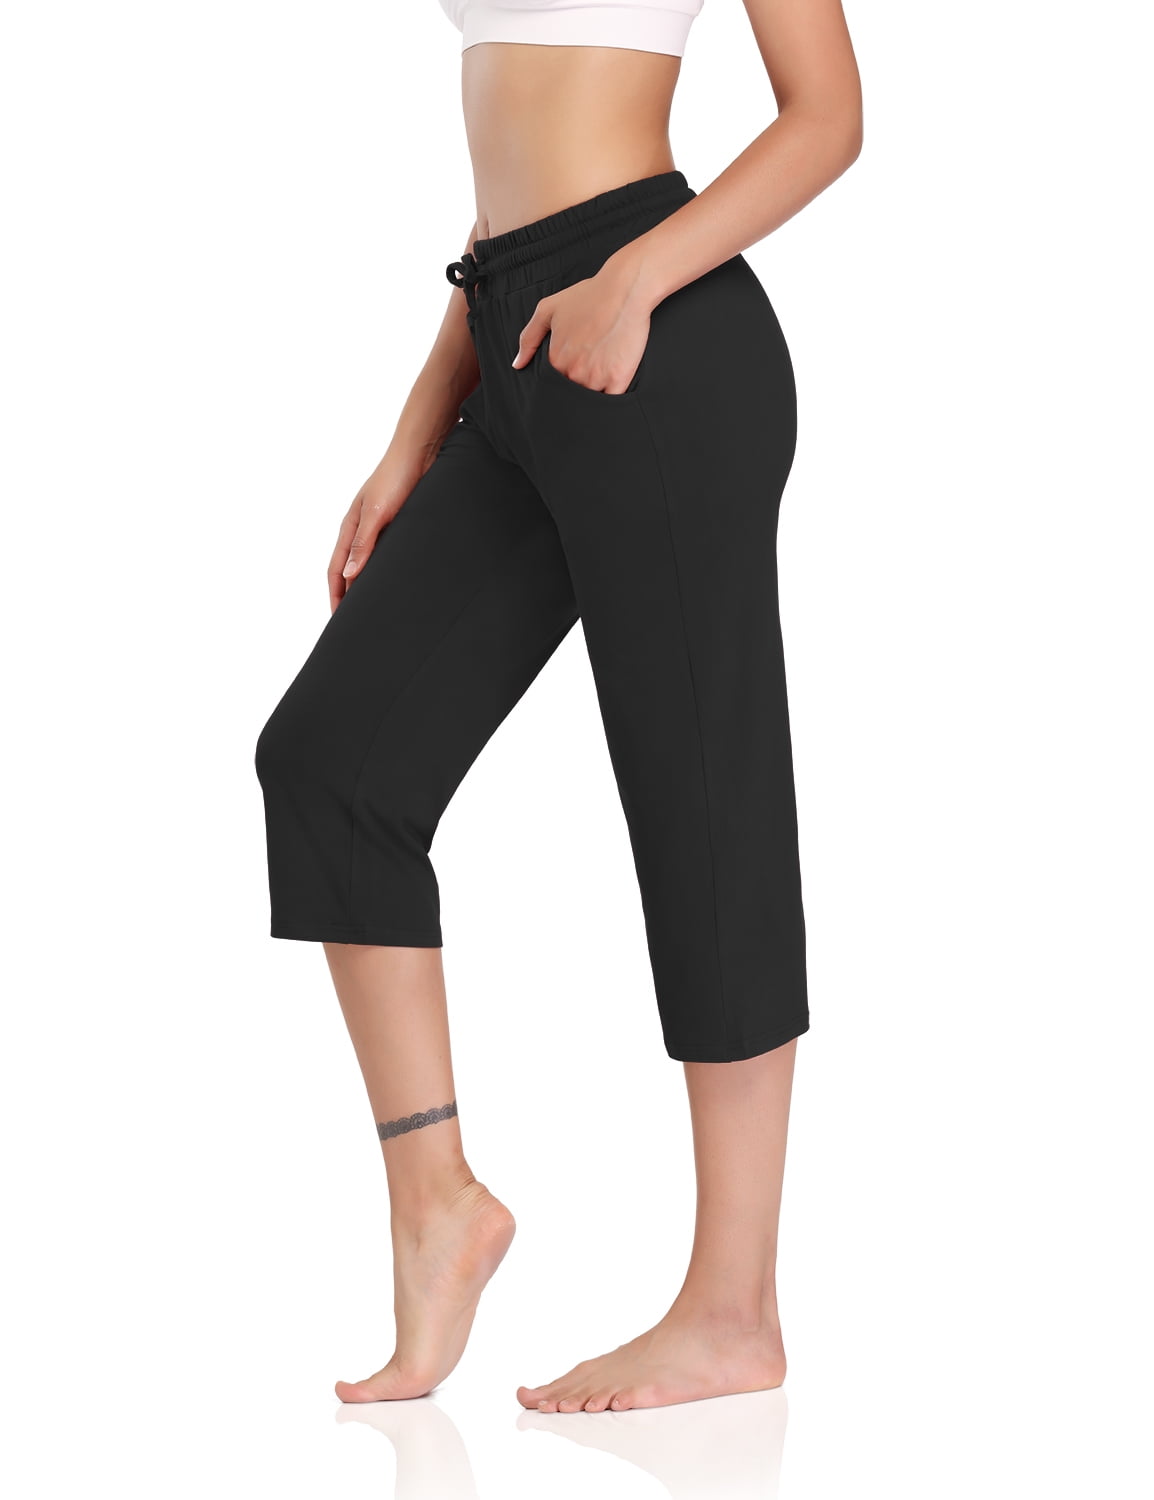 DIBAOLONG Womens Yoga Pants Capri Wide Leg Comfy Drawstring Loose Lounge Workout Pants with Pockets